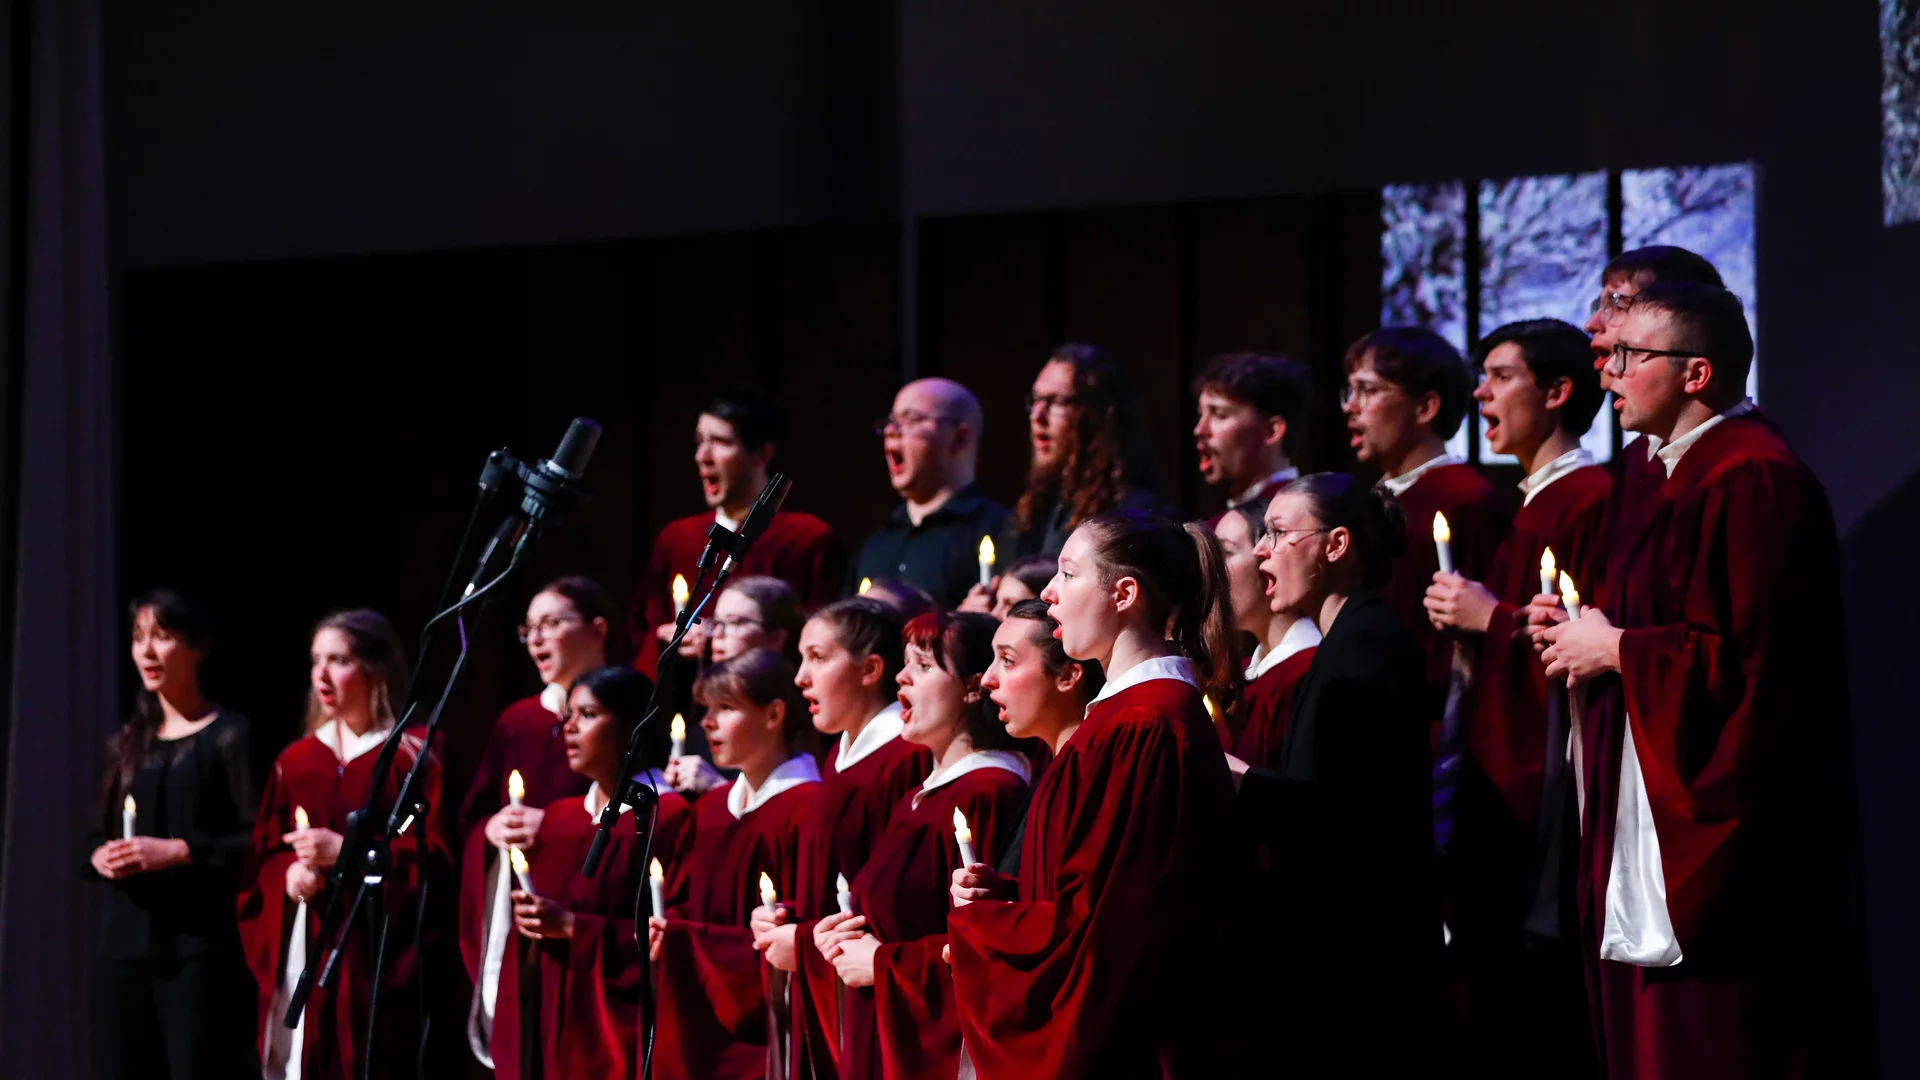 Houghton choir singing during Prism winter concert.